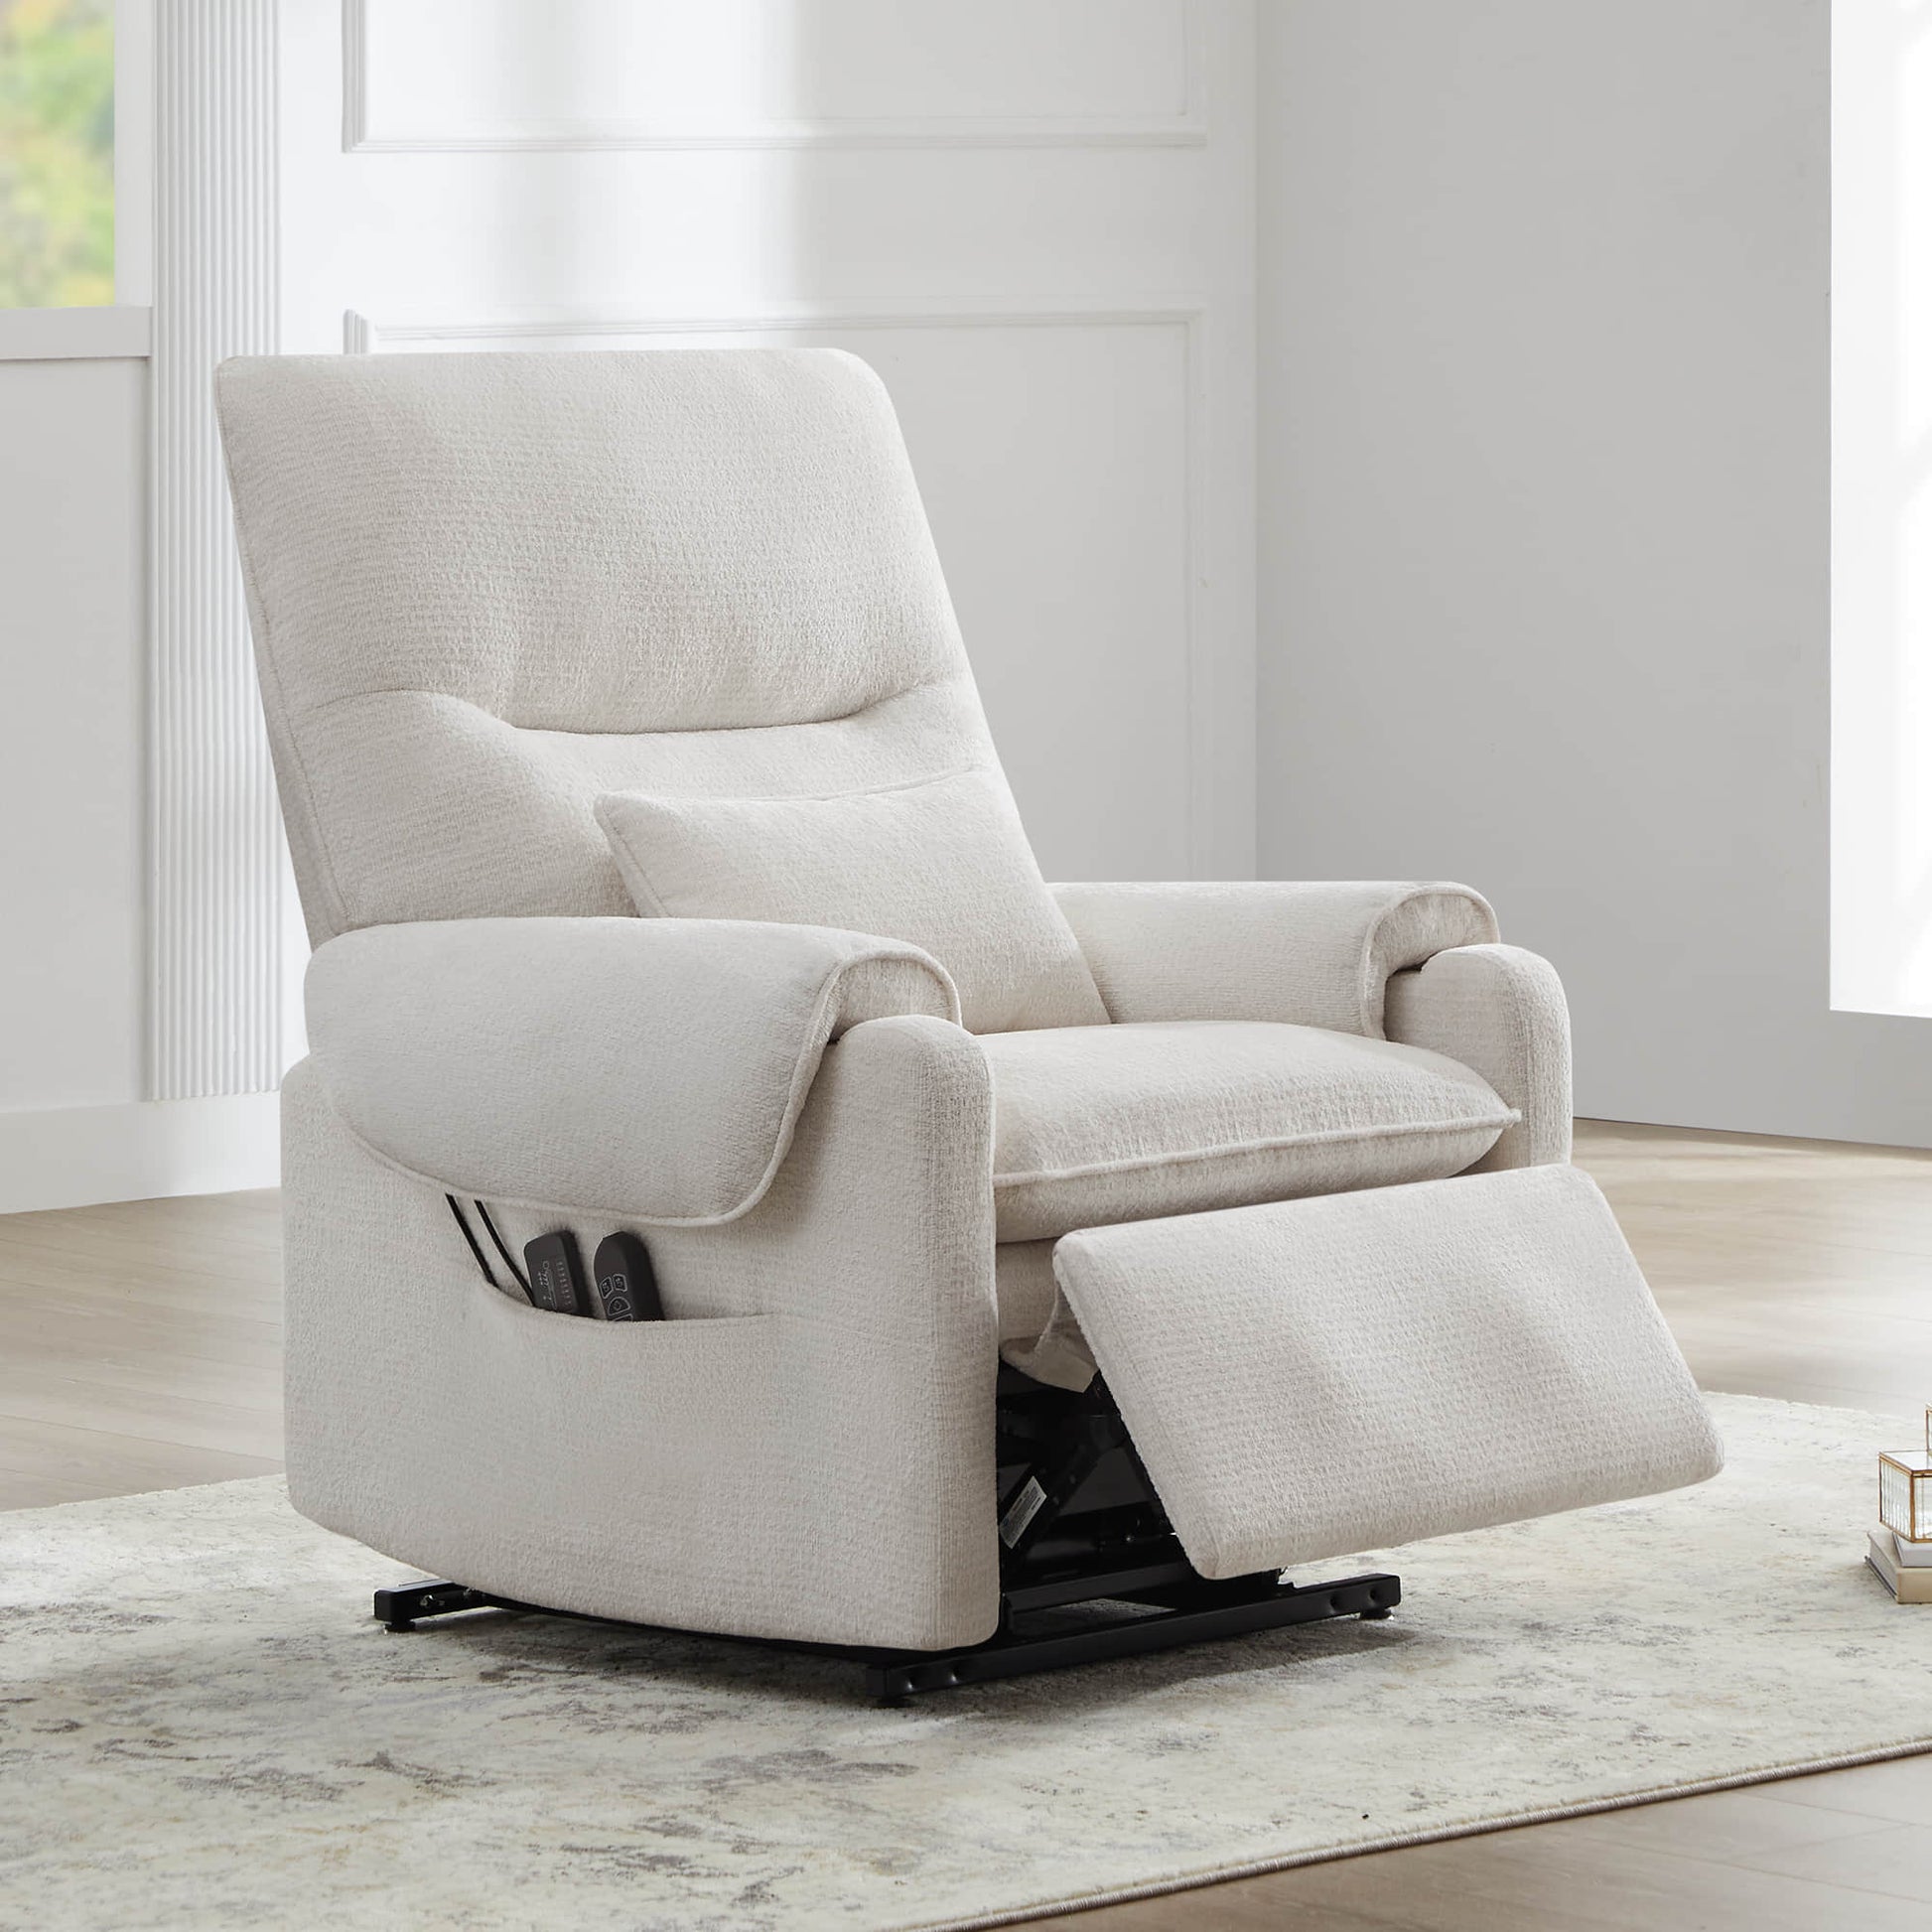 CHITA LIVING-Coro Power Lift Chair Recliner For Elderly-Lift Chair-Chenille Fabric-Cream-